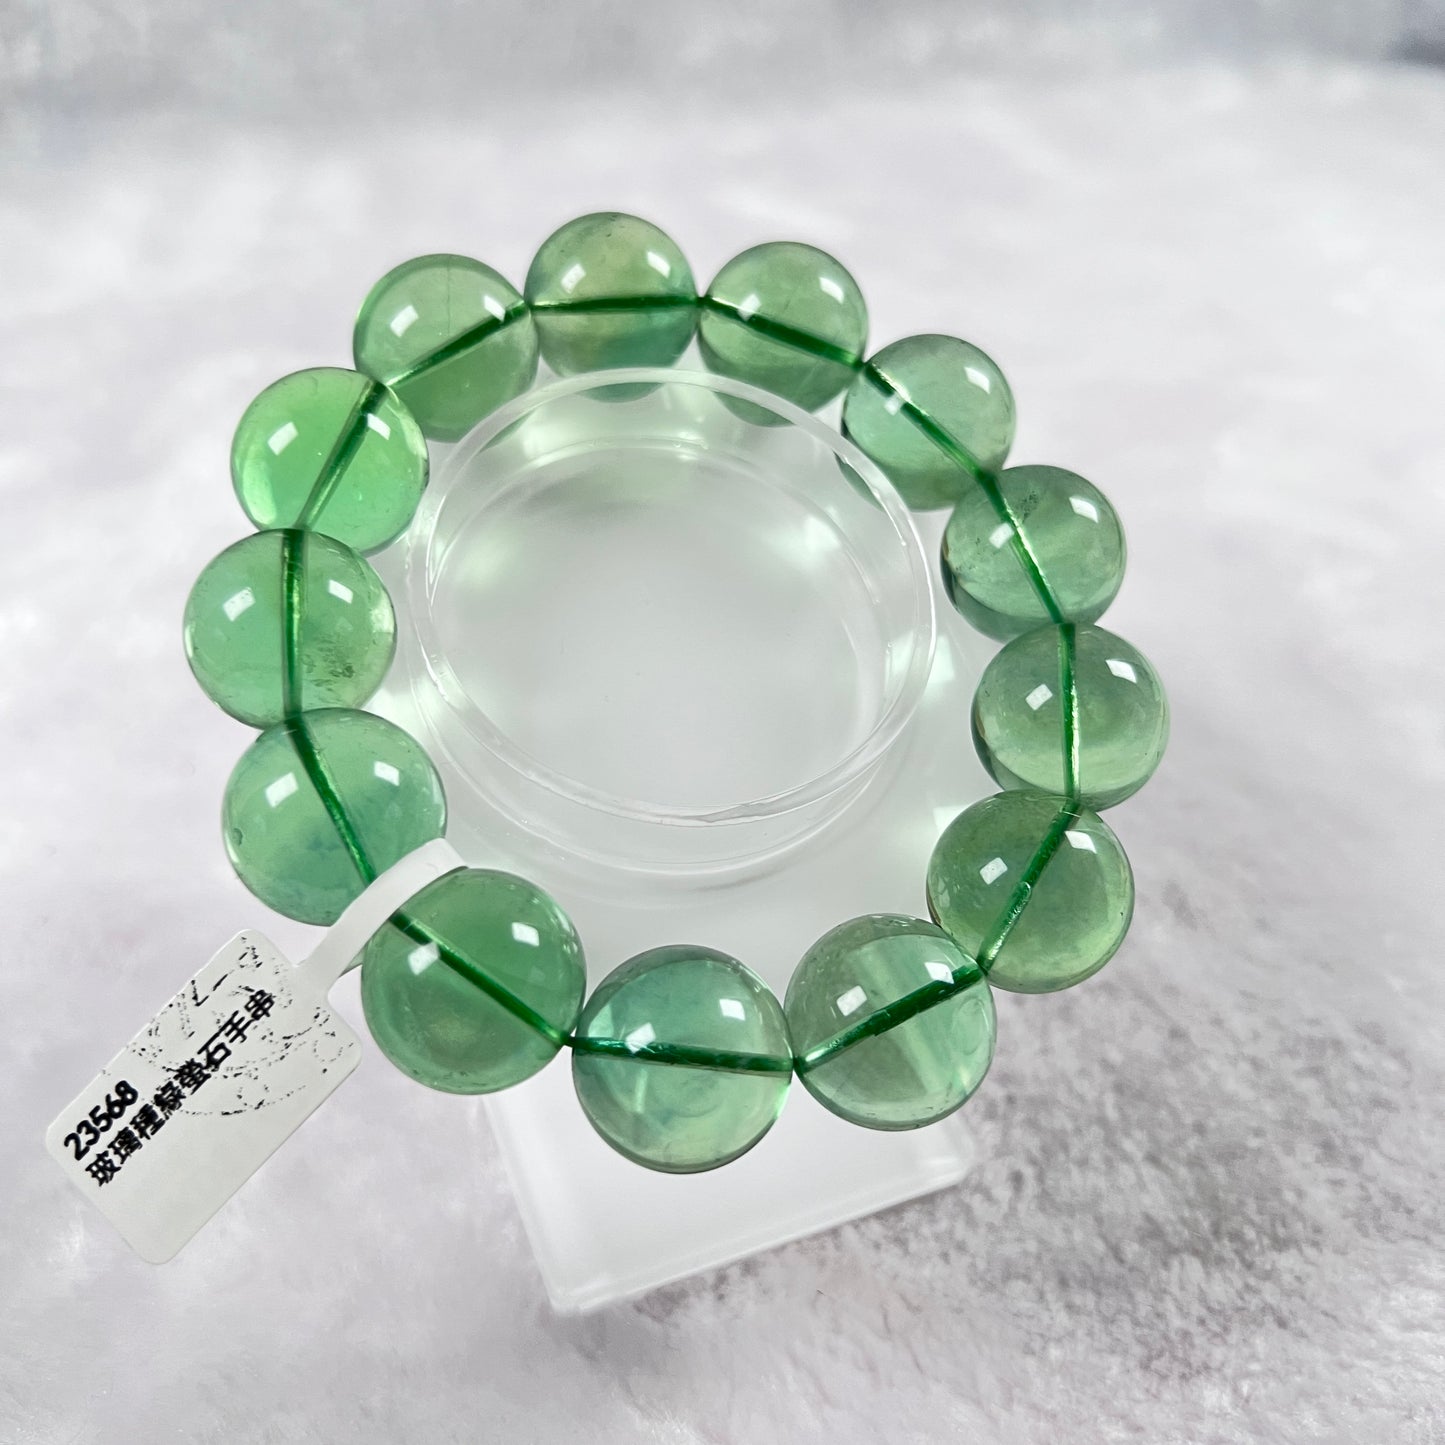 玻璃種綠螢石手串-18mm+